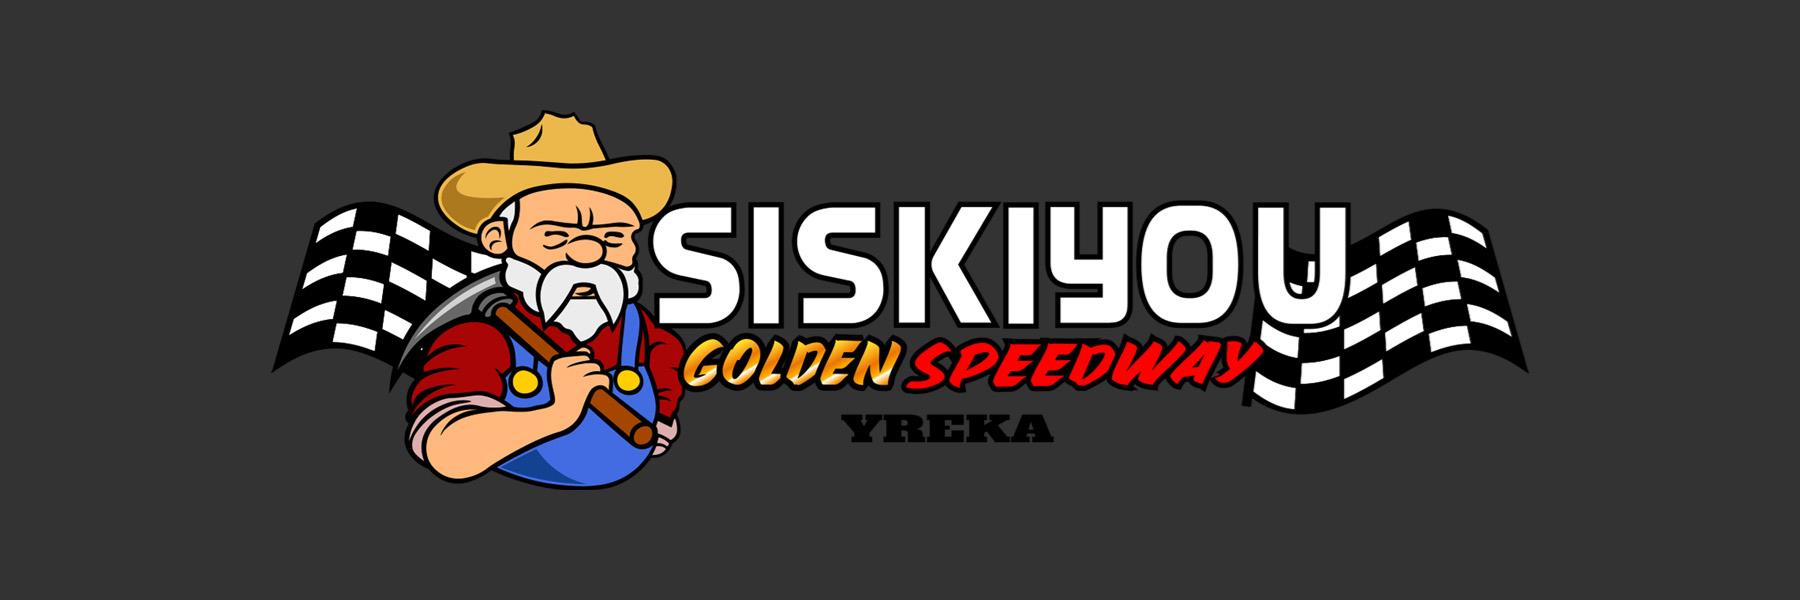 6/19/2021 - Siskiyou Golden Speedway